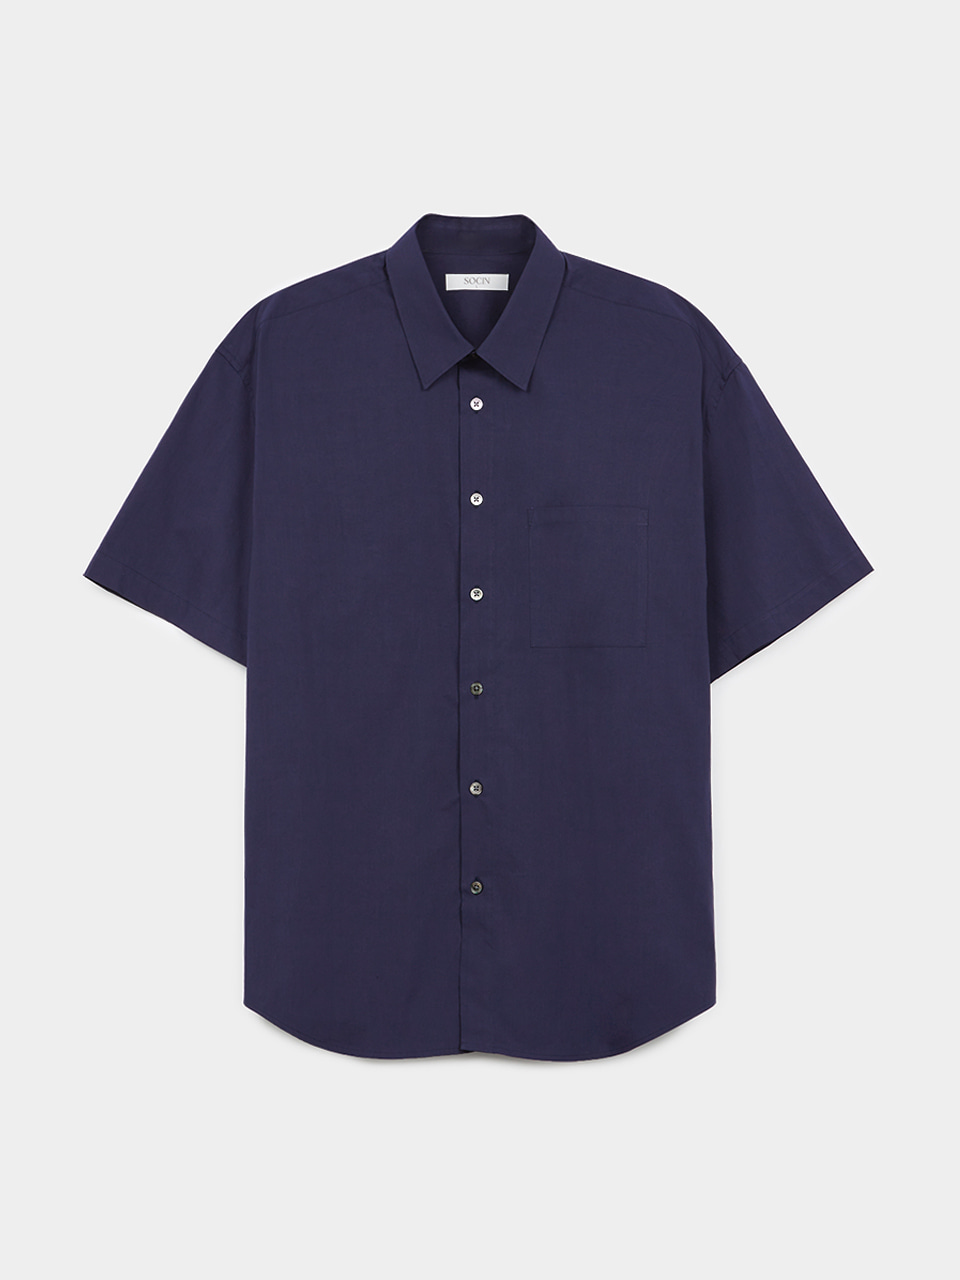 Washer Cotton Half Shirts (Navy)